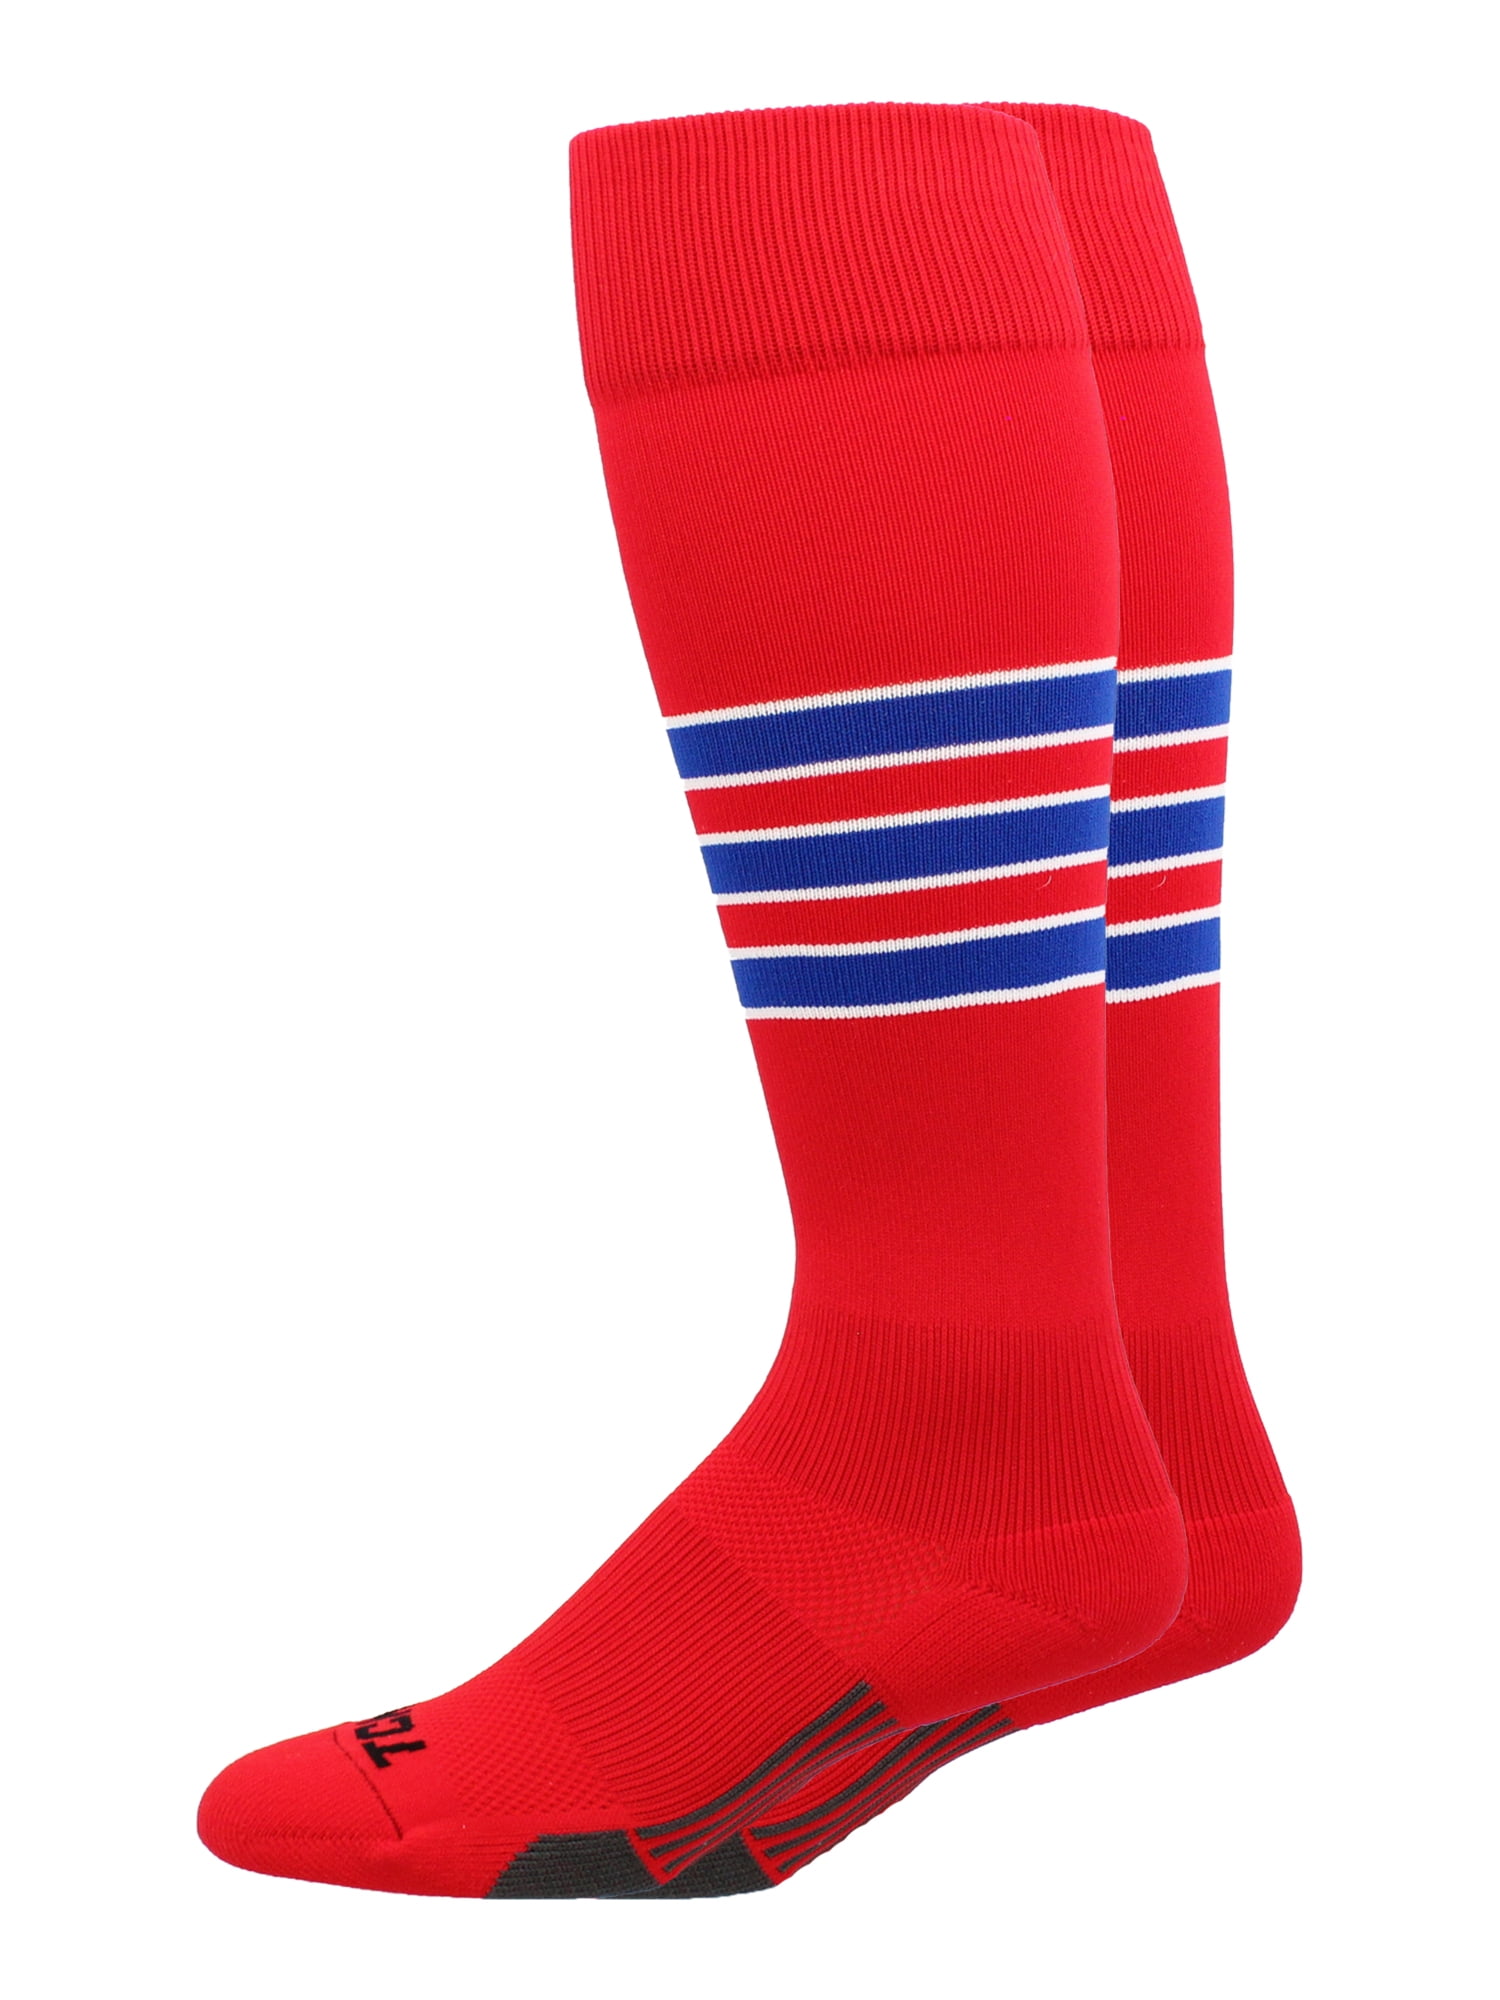 MadSportsStuff Dugout 3 Stripe Baseball Socks Over The Calf Length Pattern E